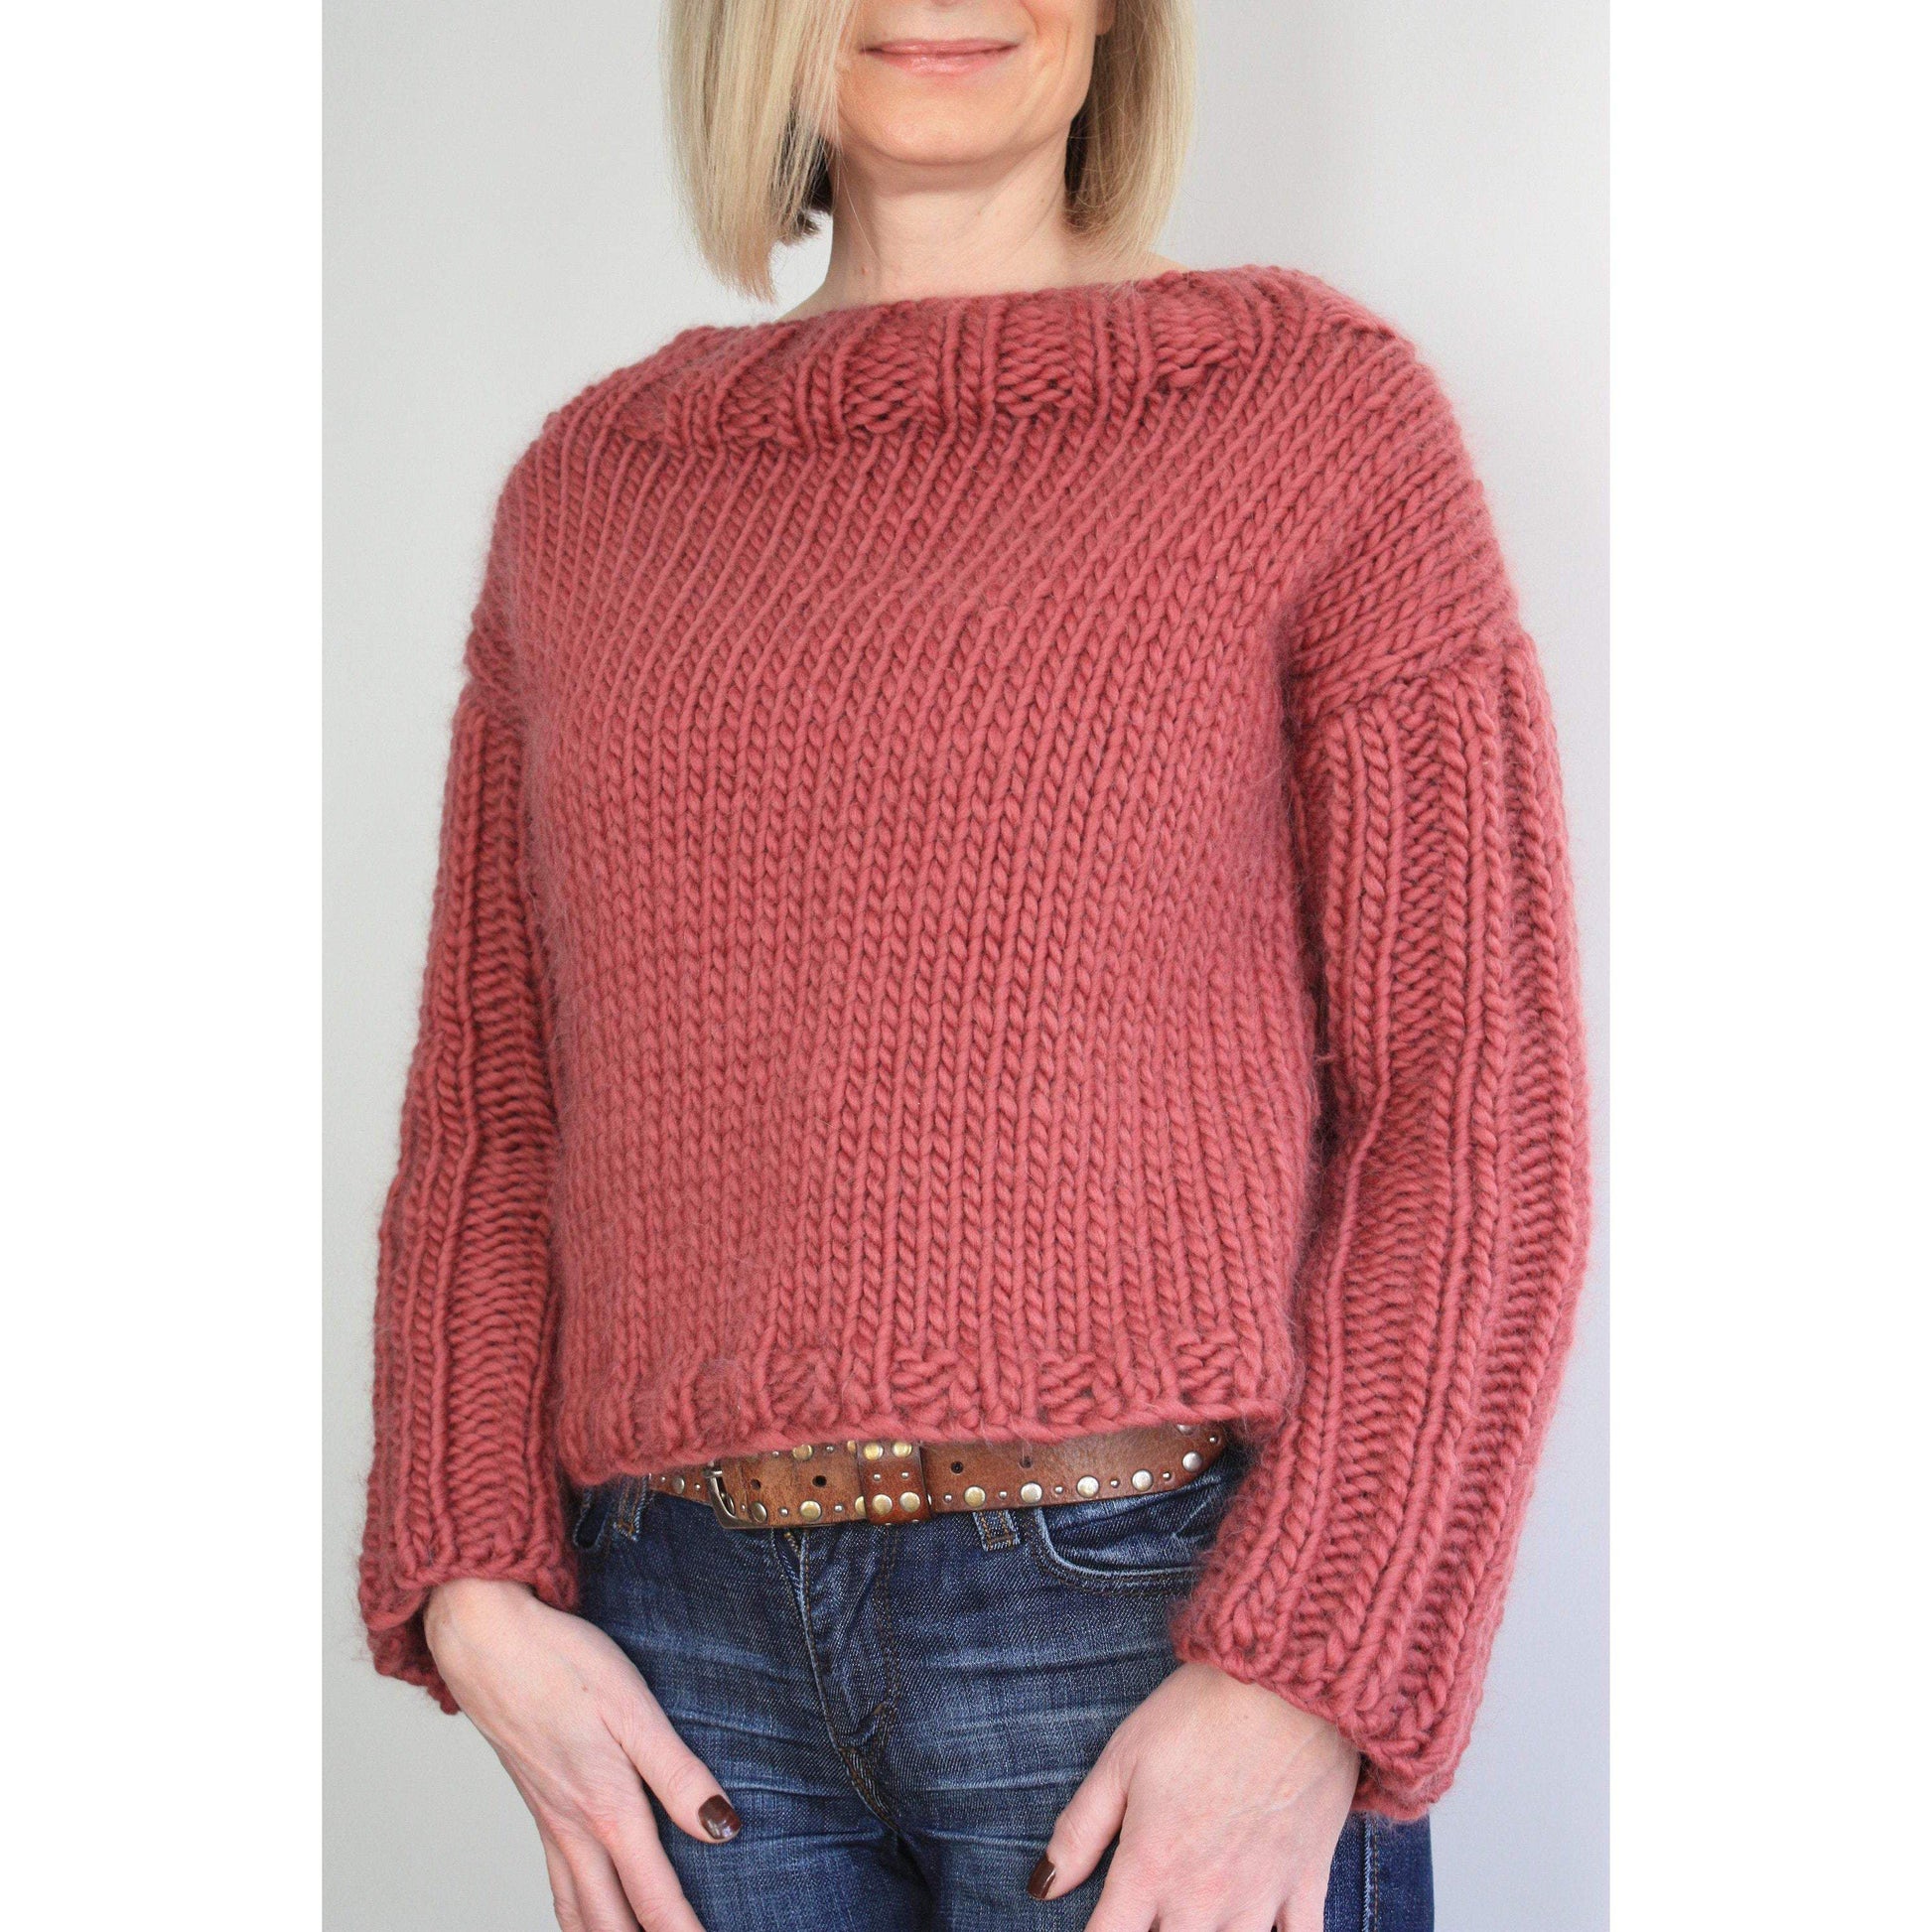 Easy Knitting Pattern - Railway Sleeve Cropped Sweater - King & Eye